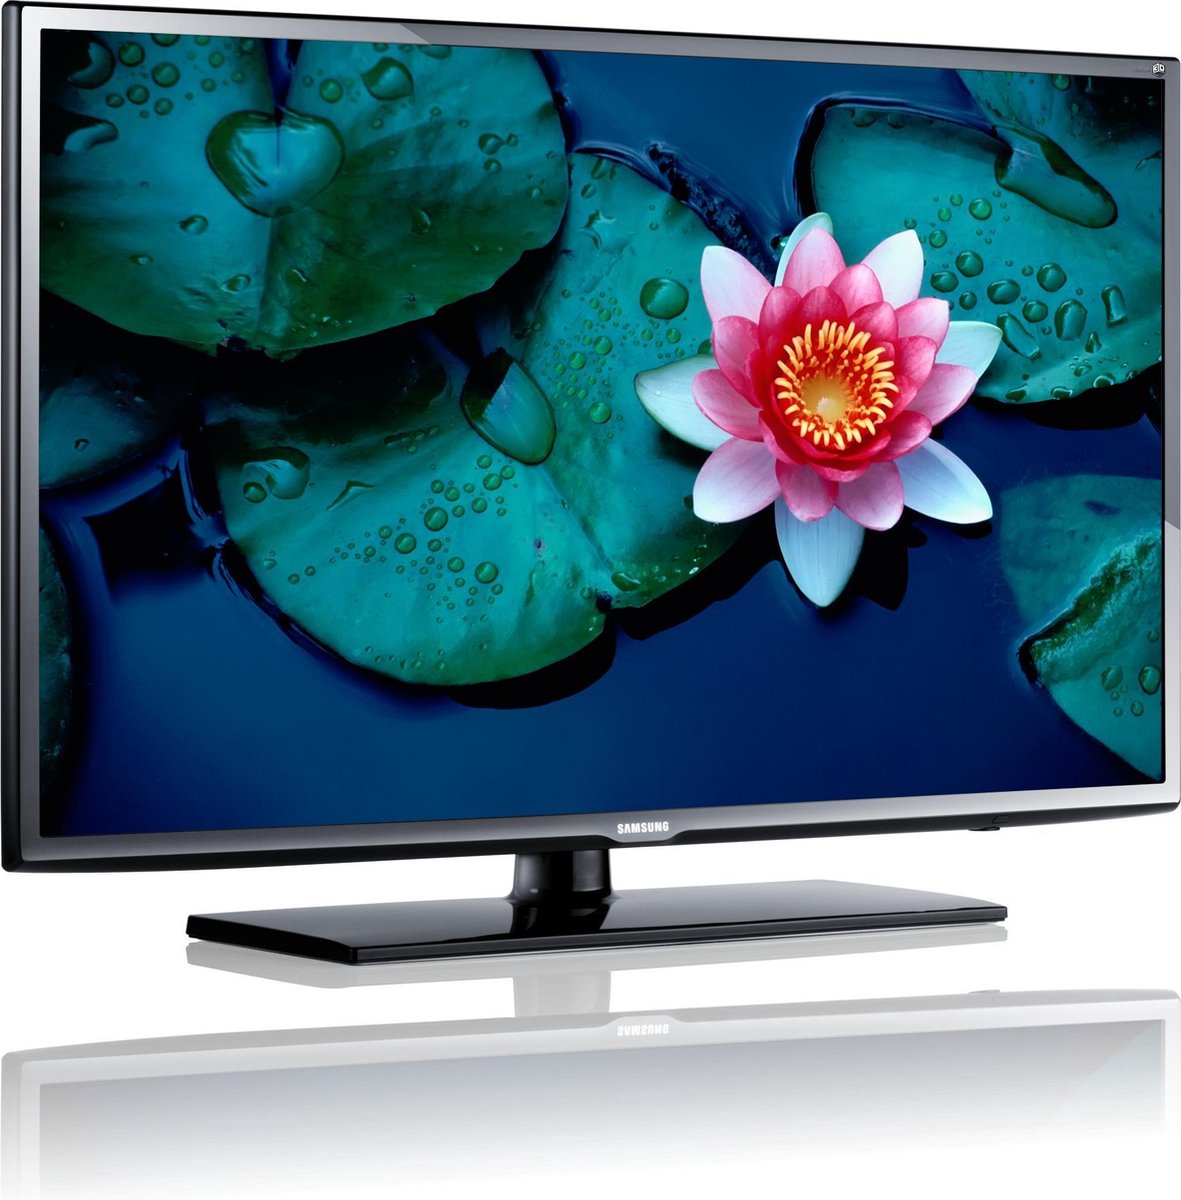 Samsung UE46EH6030 - 3D LED TV - 46 inch - HD | bol.com